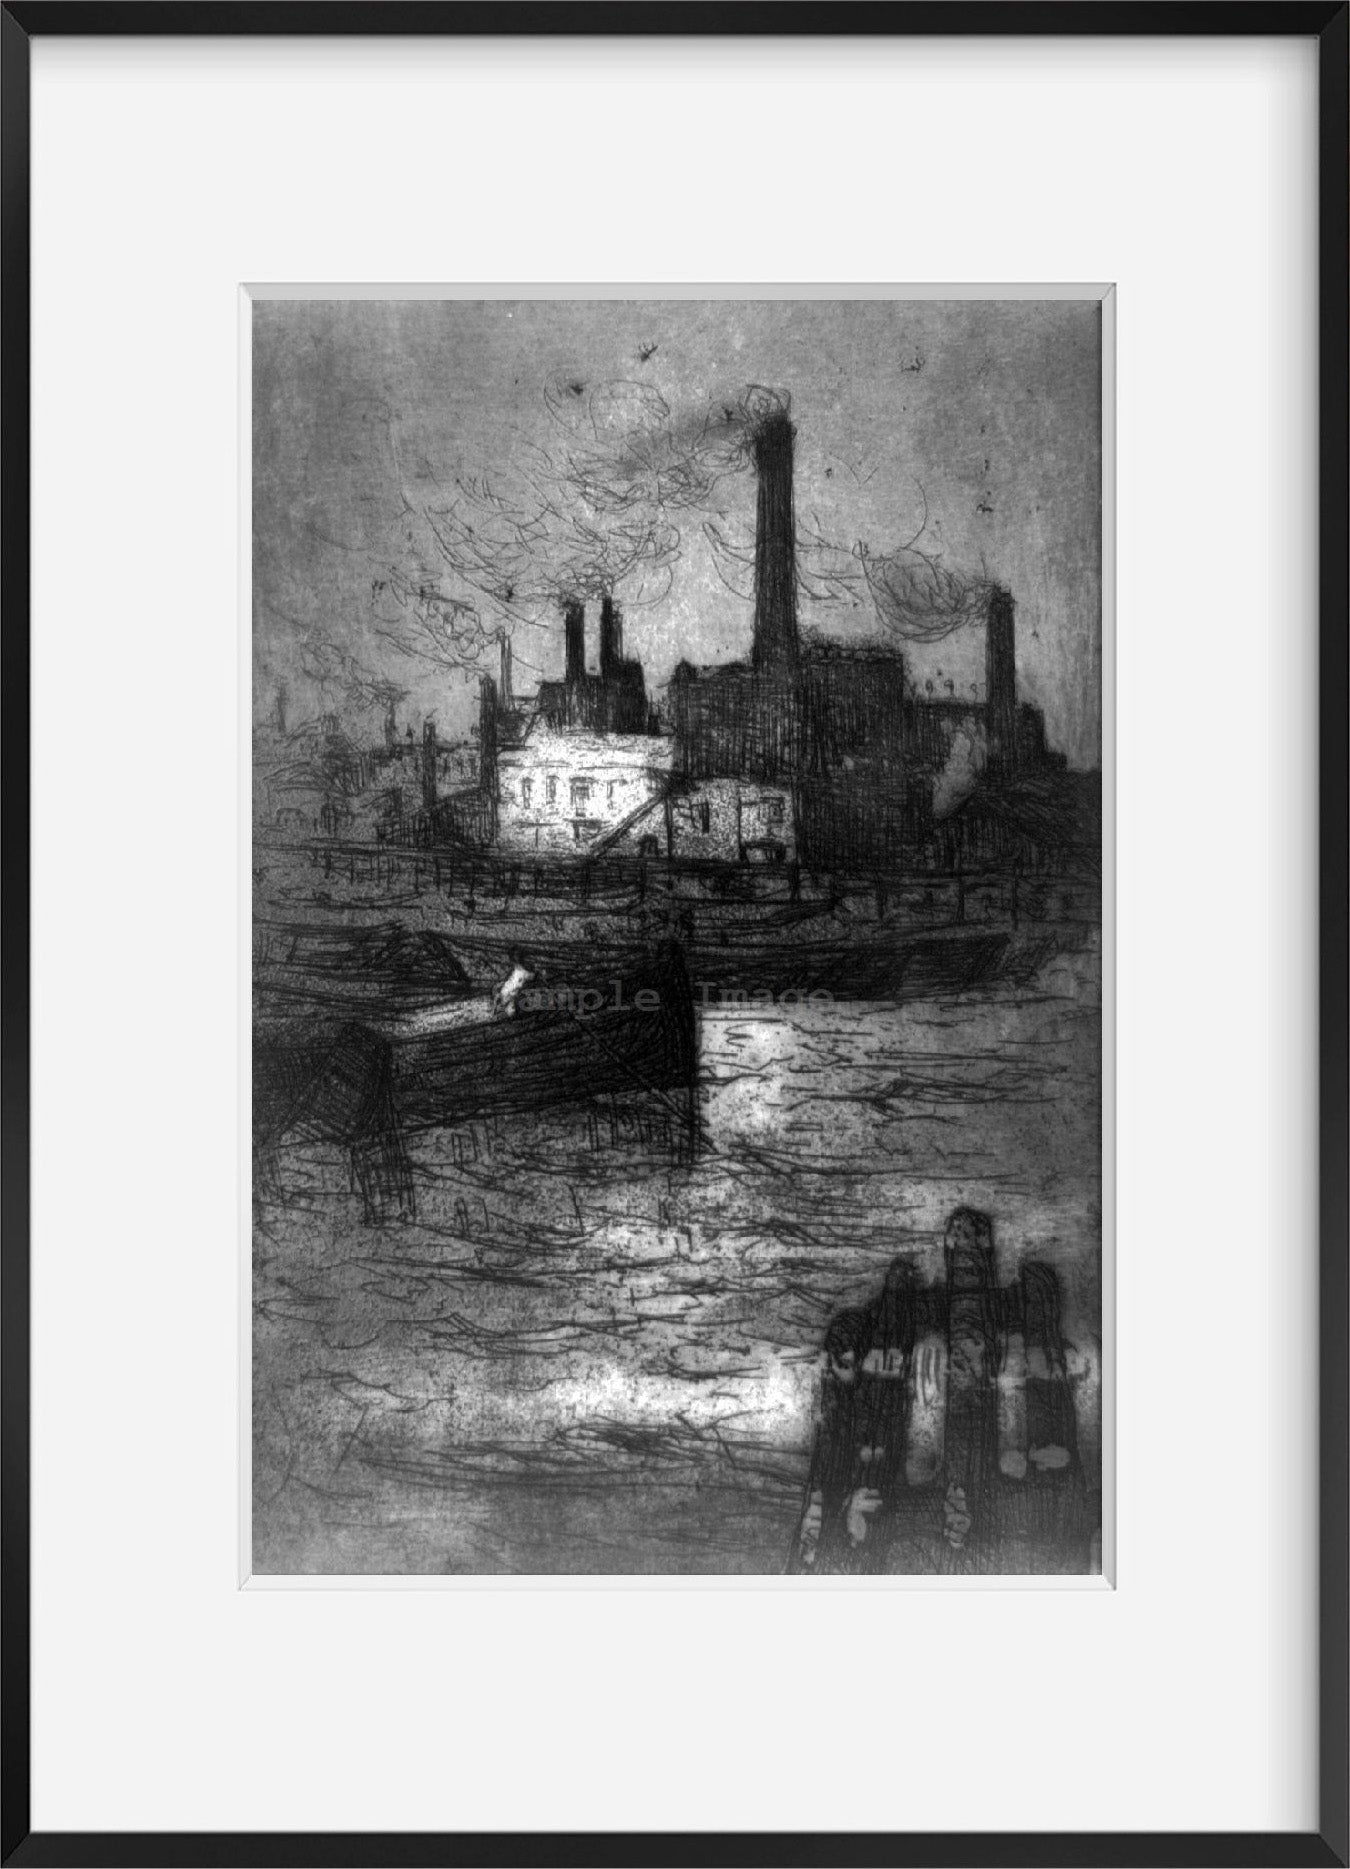 Vintage S.d. photograph: Factories on the Thames